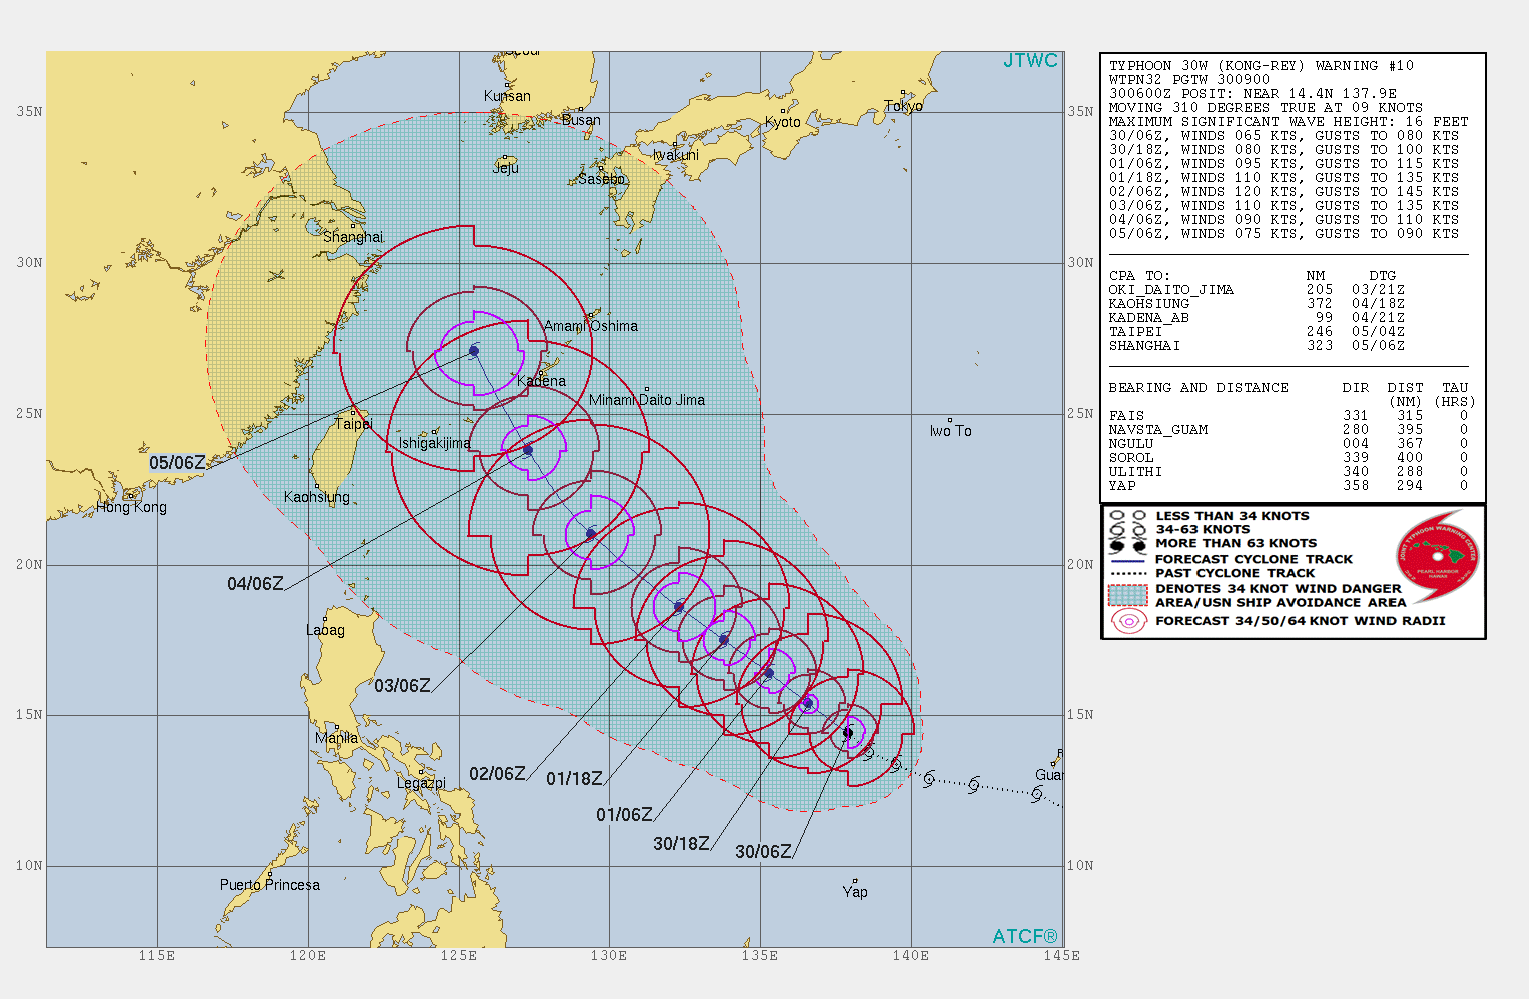 tifone kong-rey giappone